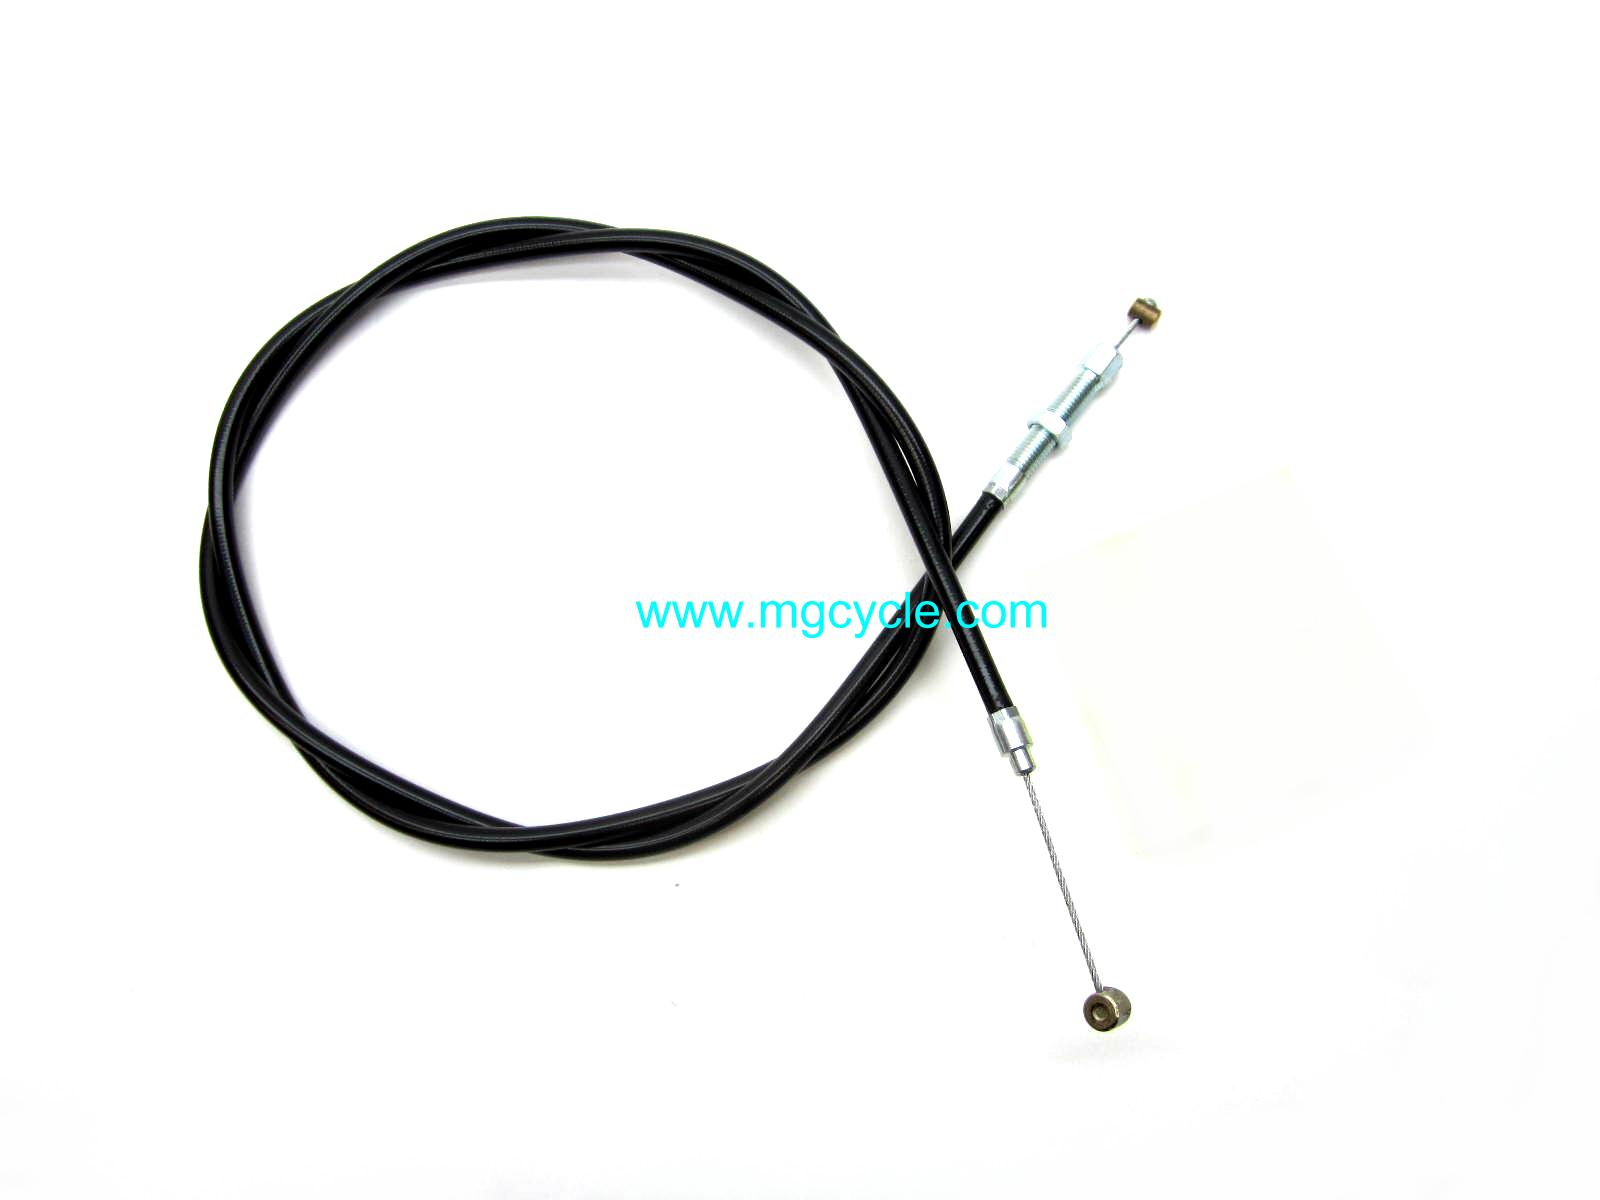 Clutch cable V700 Ambassador V750 Special, longer Police length